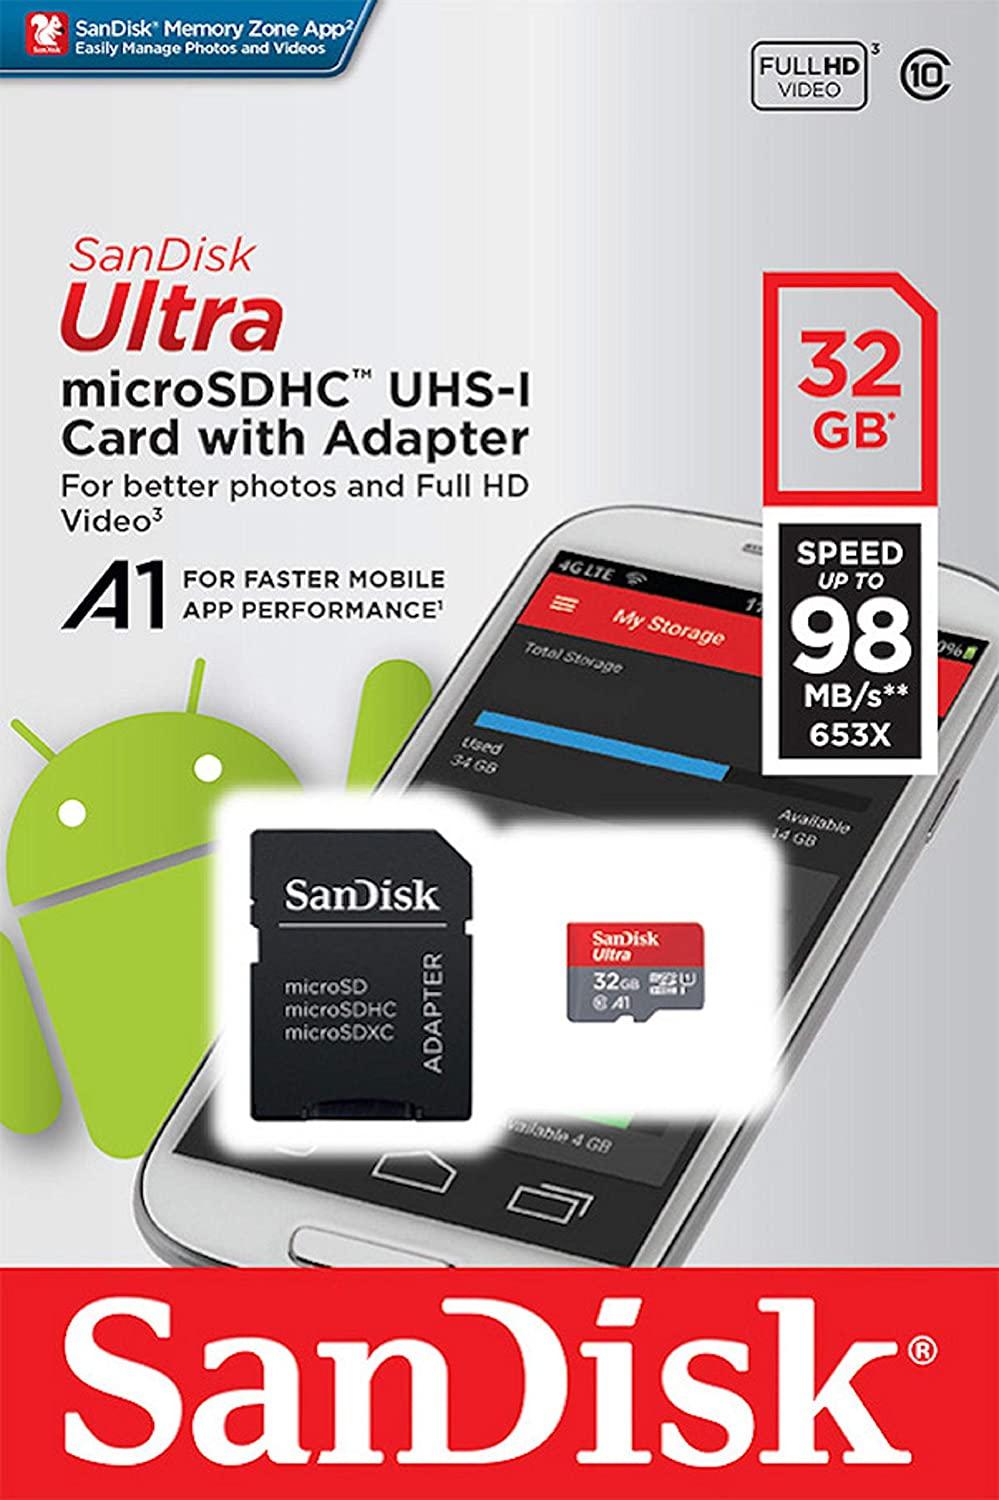 SanDisk Basic 4 GB MicroSDHC Class 4 4 MB/s Memory Card - SanDisk 